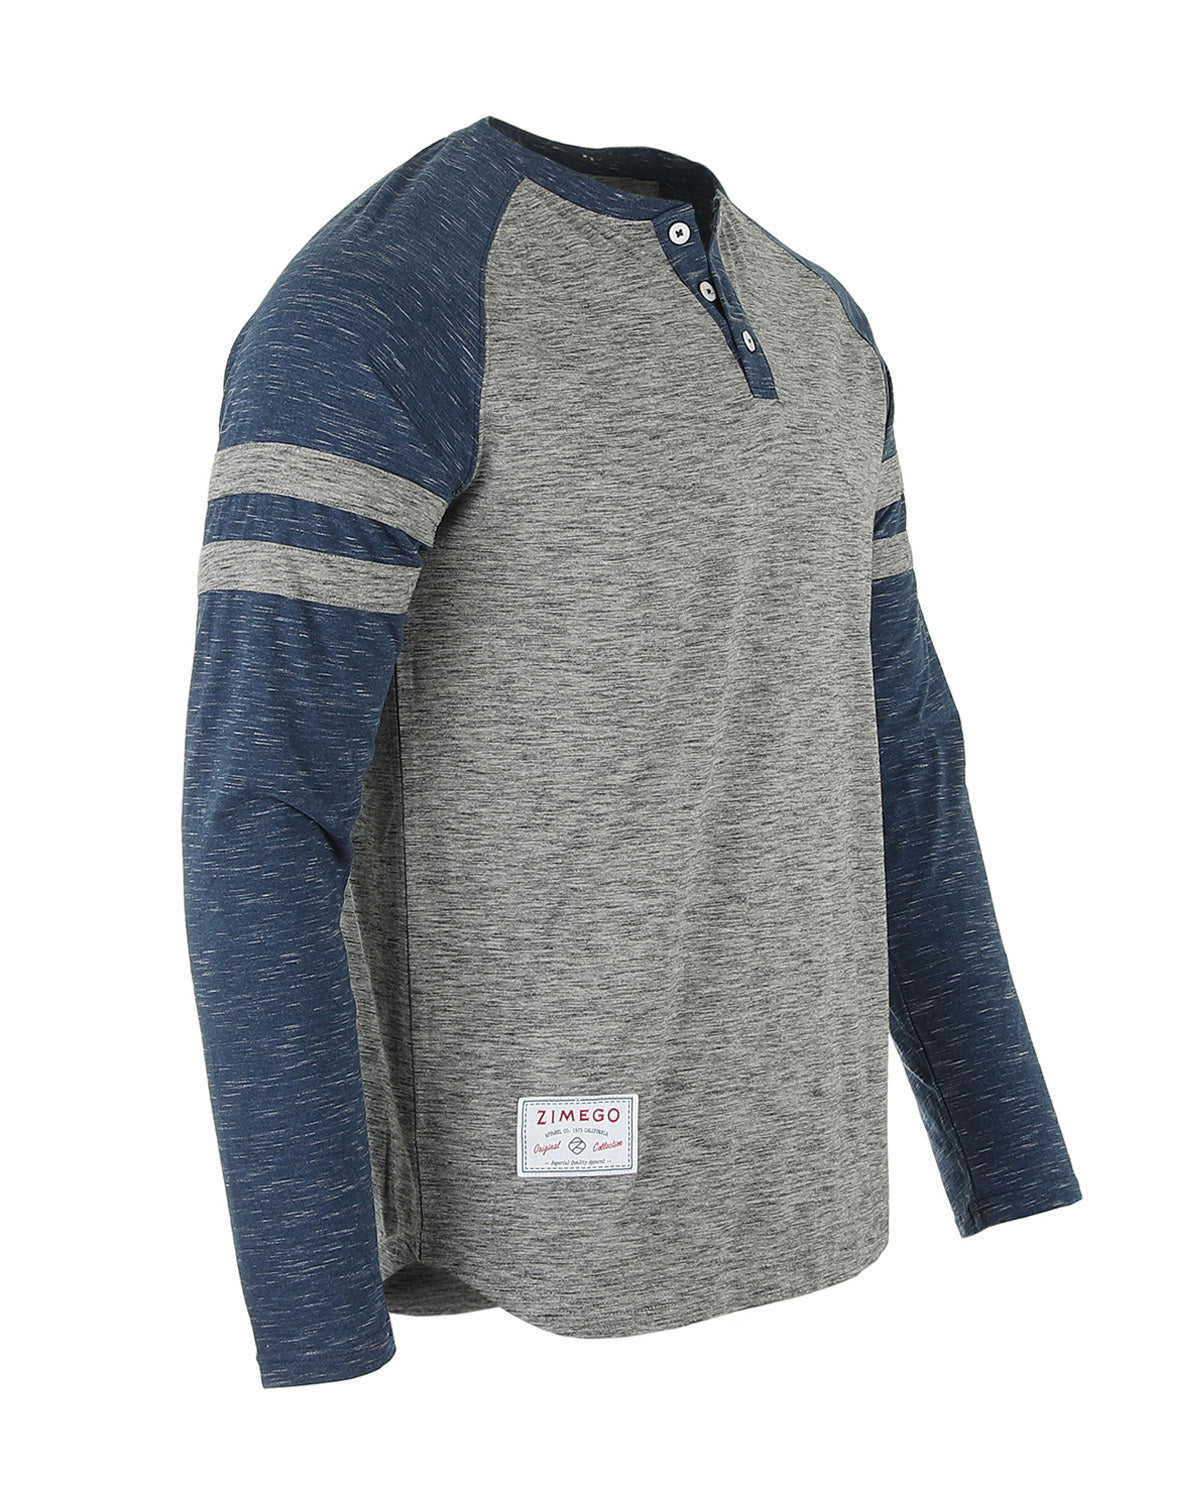 Men’s Casual Long Sleeve Baseball Raglan Athletic Fashion Henley Shirt